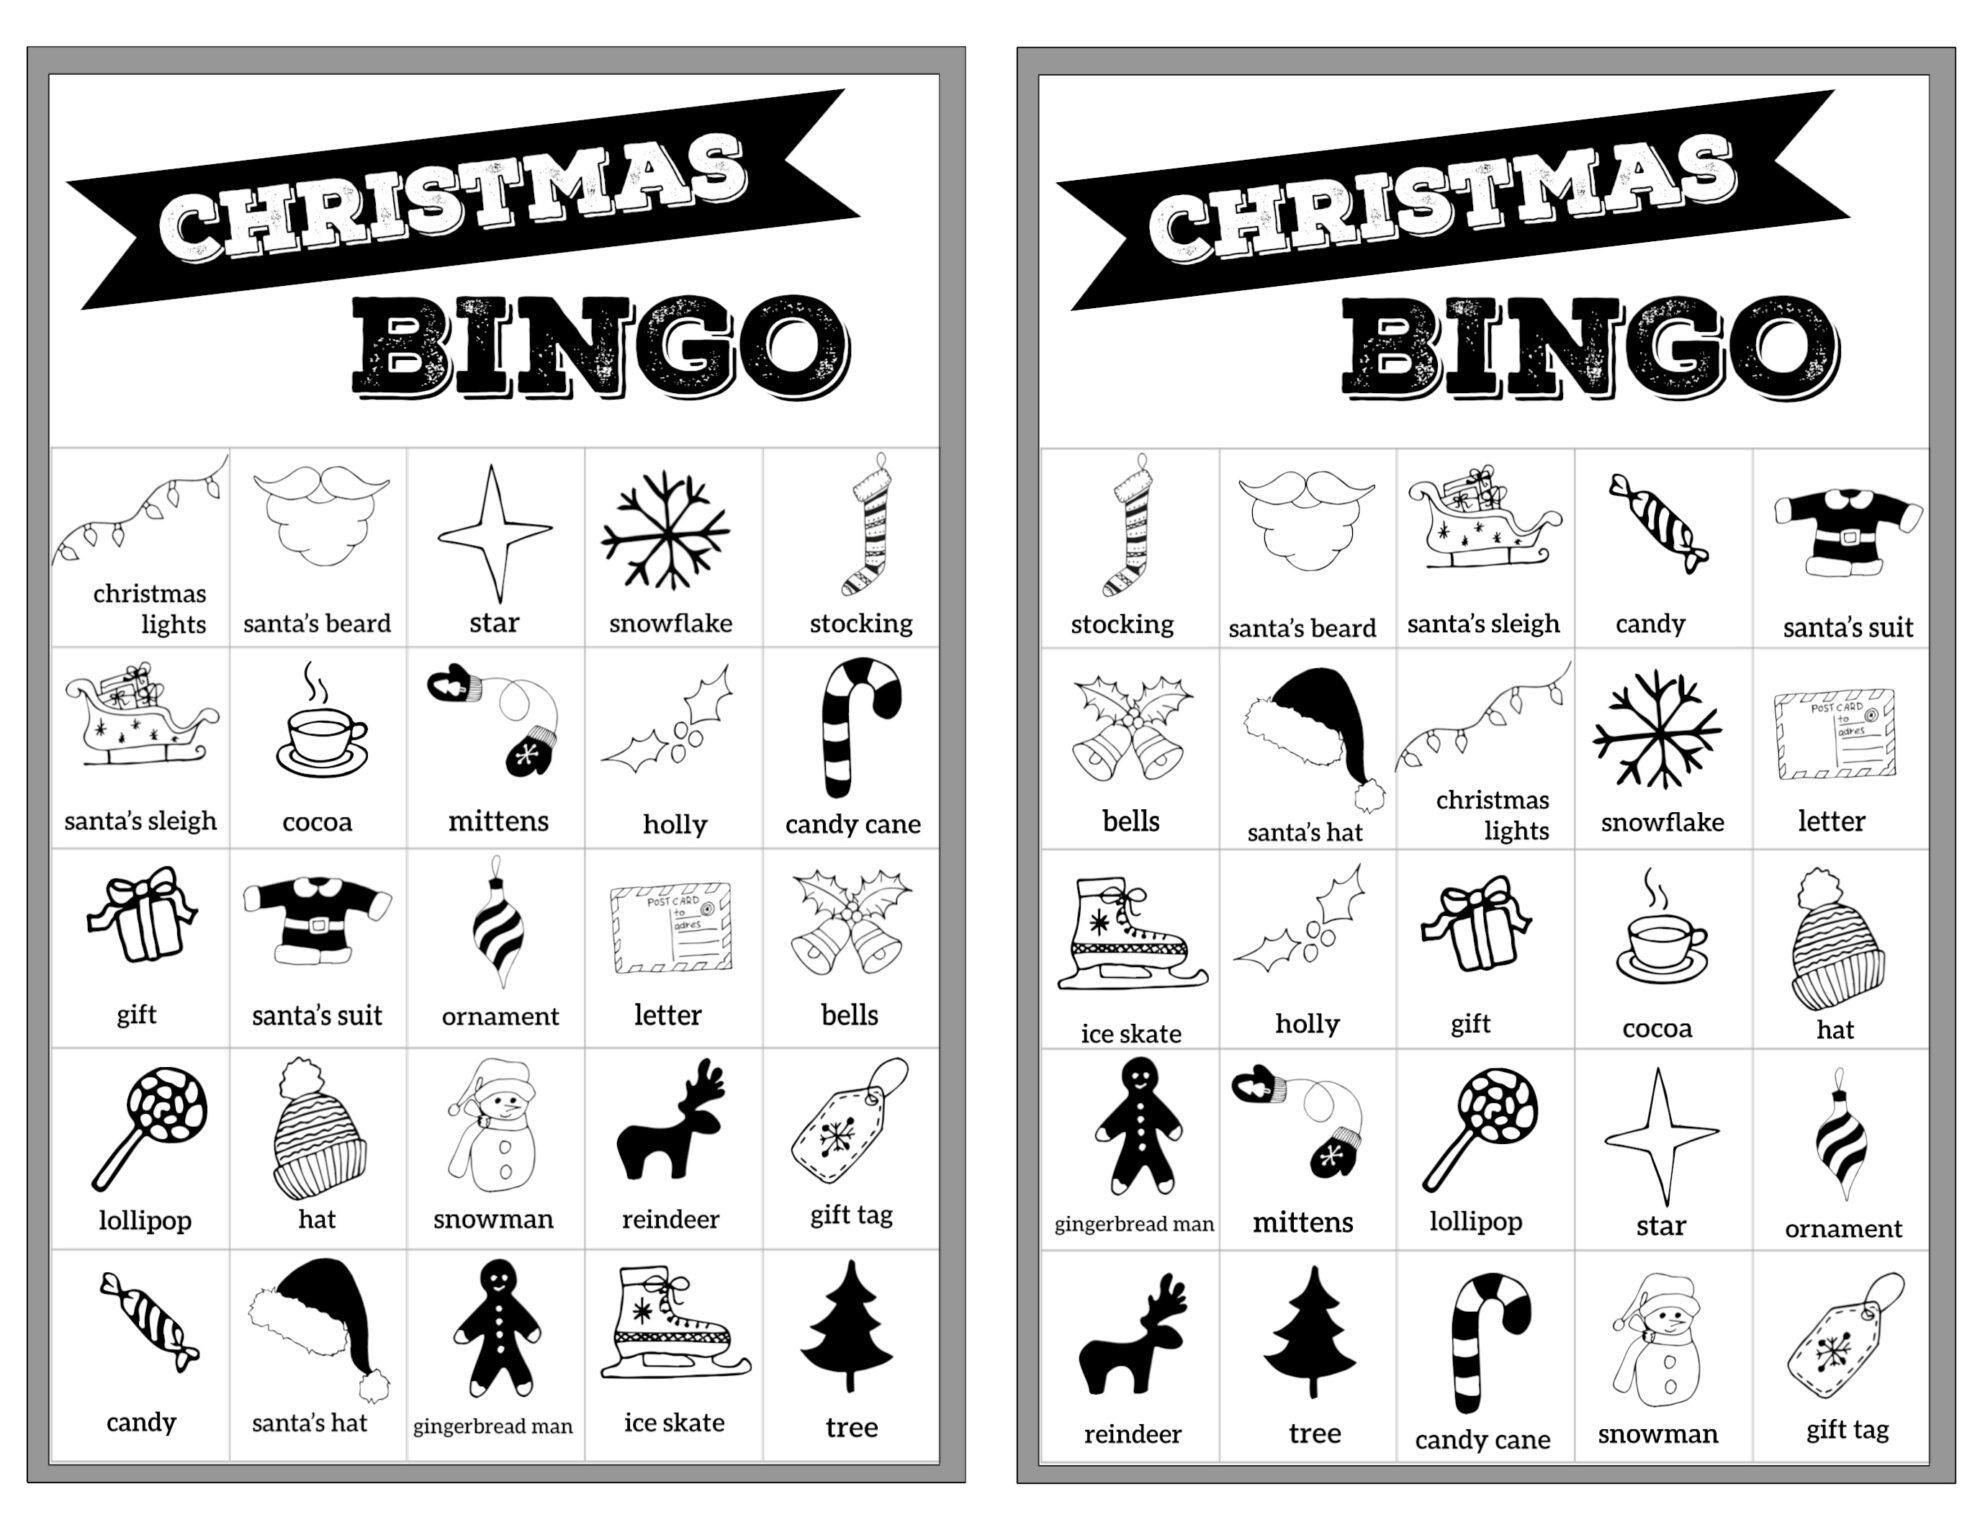 Free Christmas Bingo Printable Cards - Paper Trail Design - Free Printable Christmas Bingo